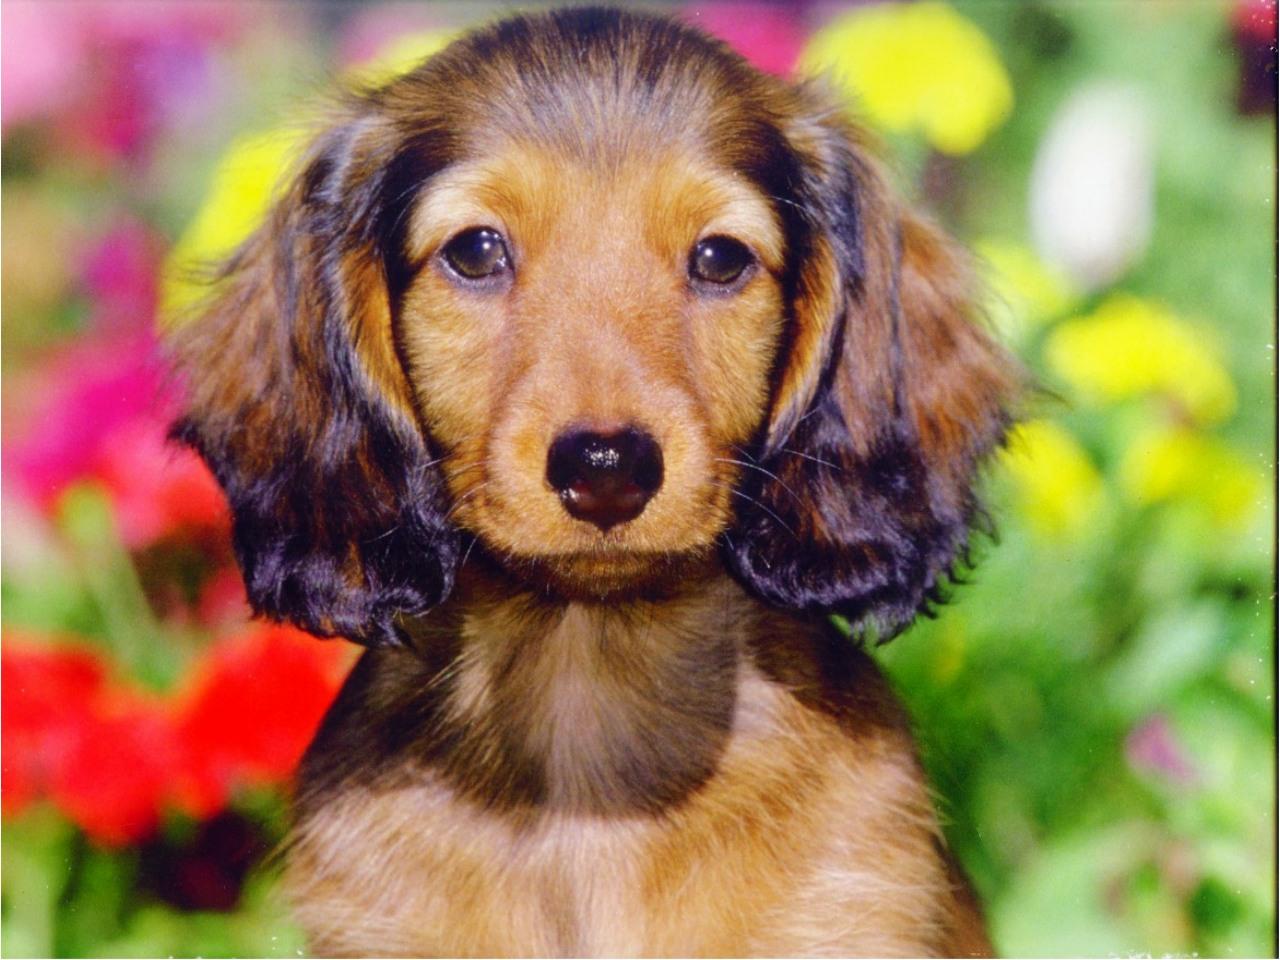 Royal dachshund dog free desktop background wallpaper image